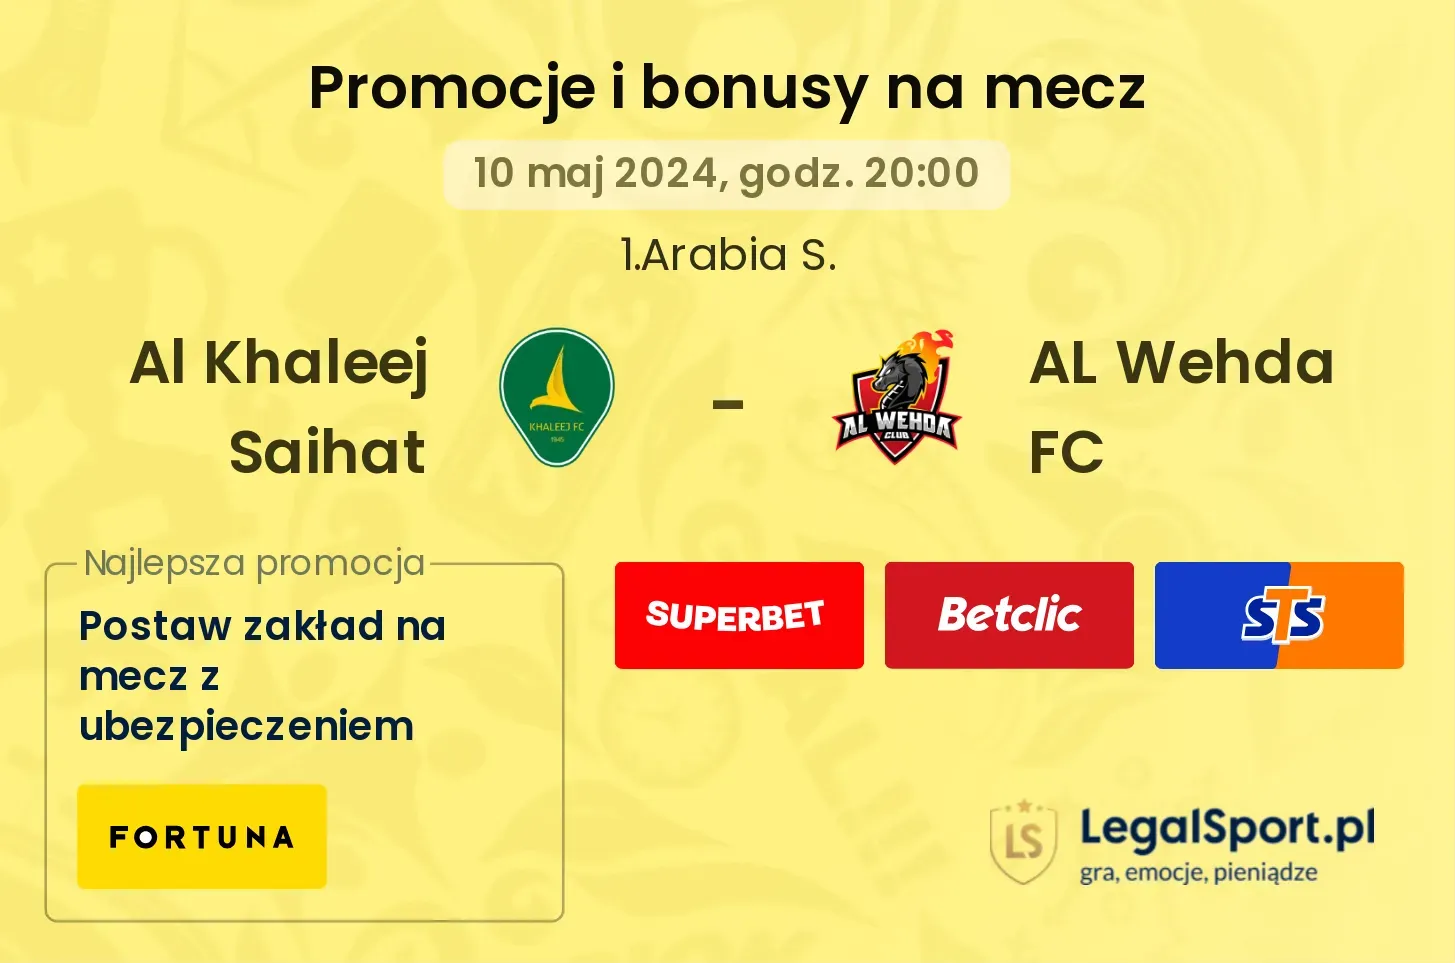 Al Khaleej Saihat - AL Wehda FC promocje bonusy na mecz